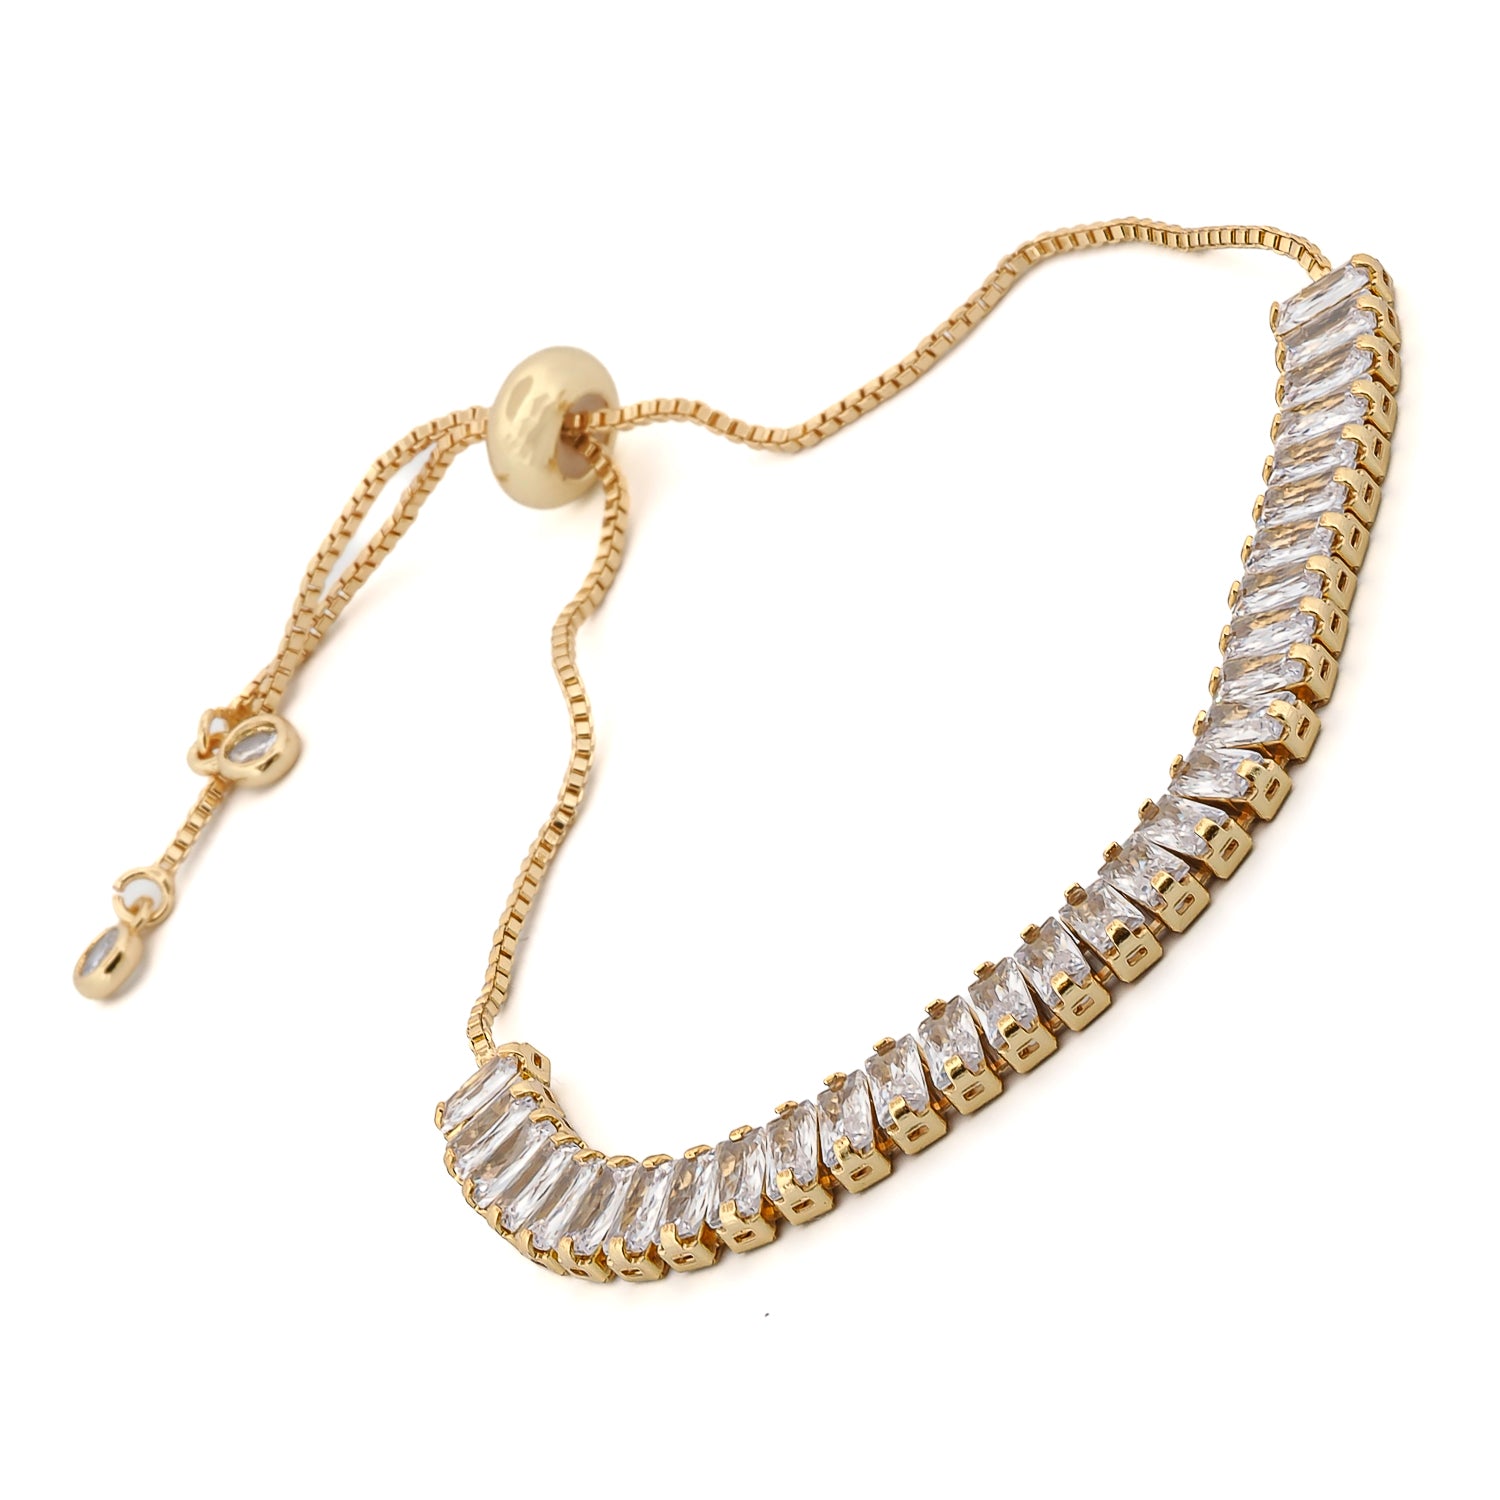 Contemporary Chic: Gold and Baguette Diamond Adjustable Bracelet